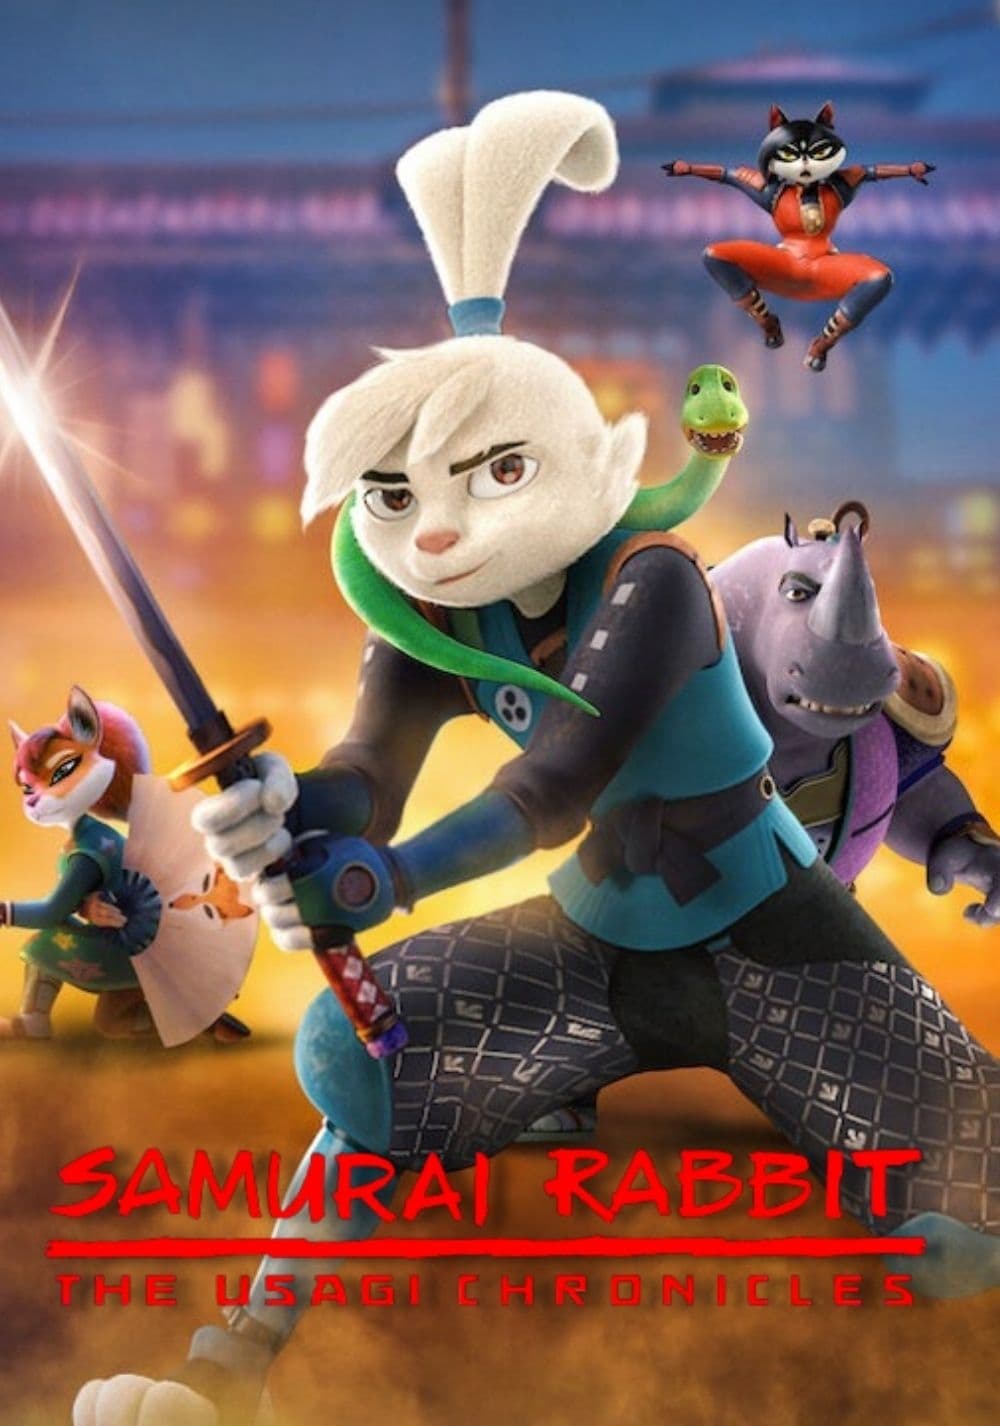 Samurai Rabbit: The Usagi Chronicles TV Shows About Feudal Japan